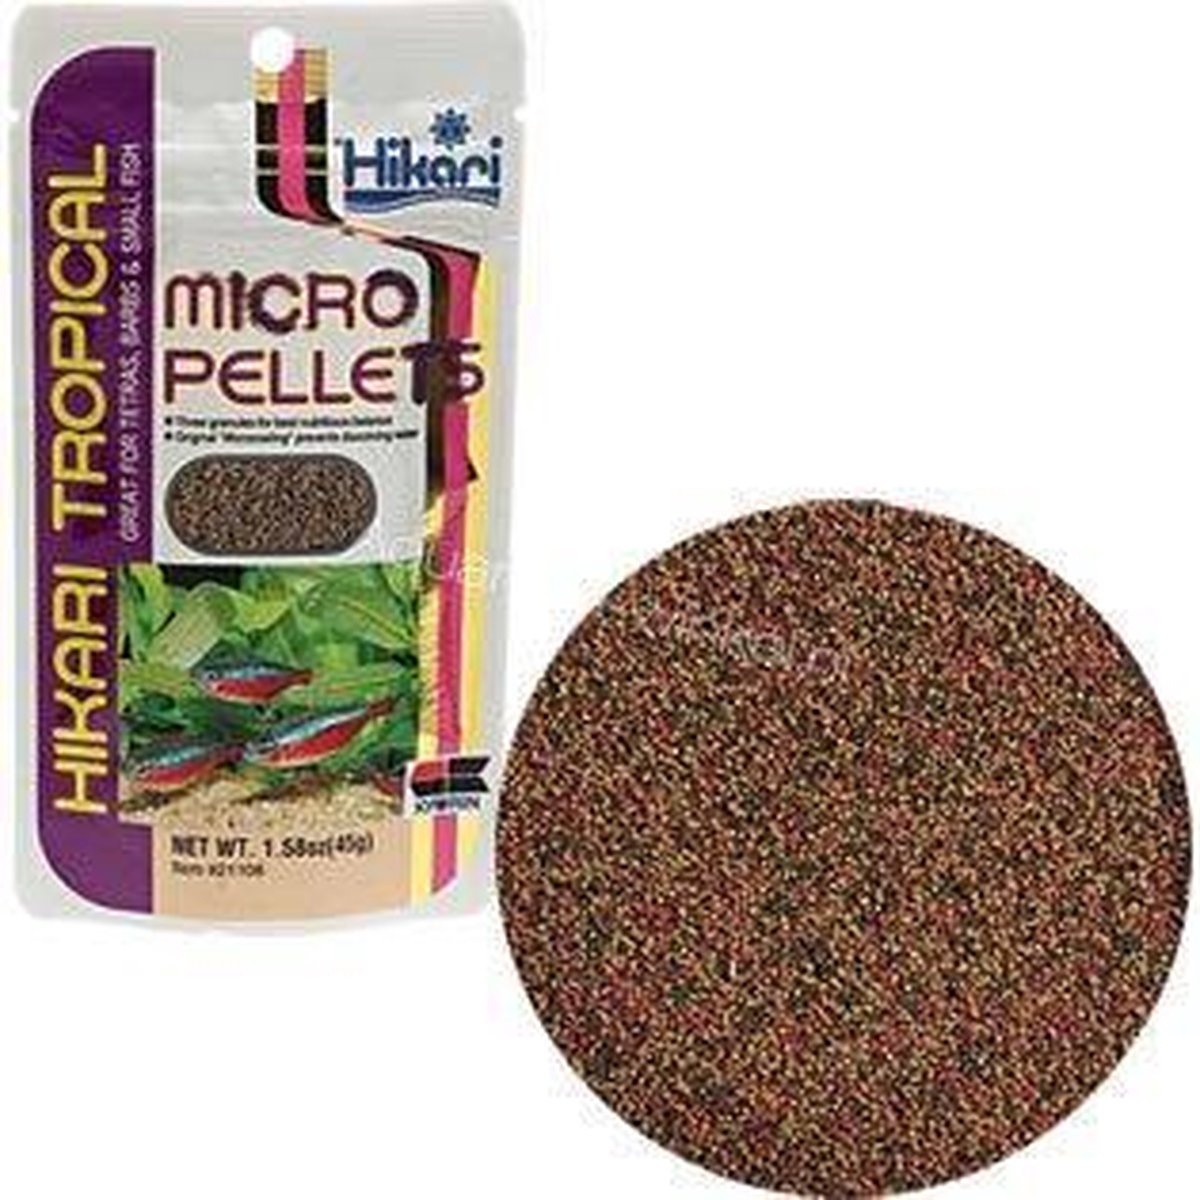 Hikari Micro Pellets 1 kg